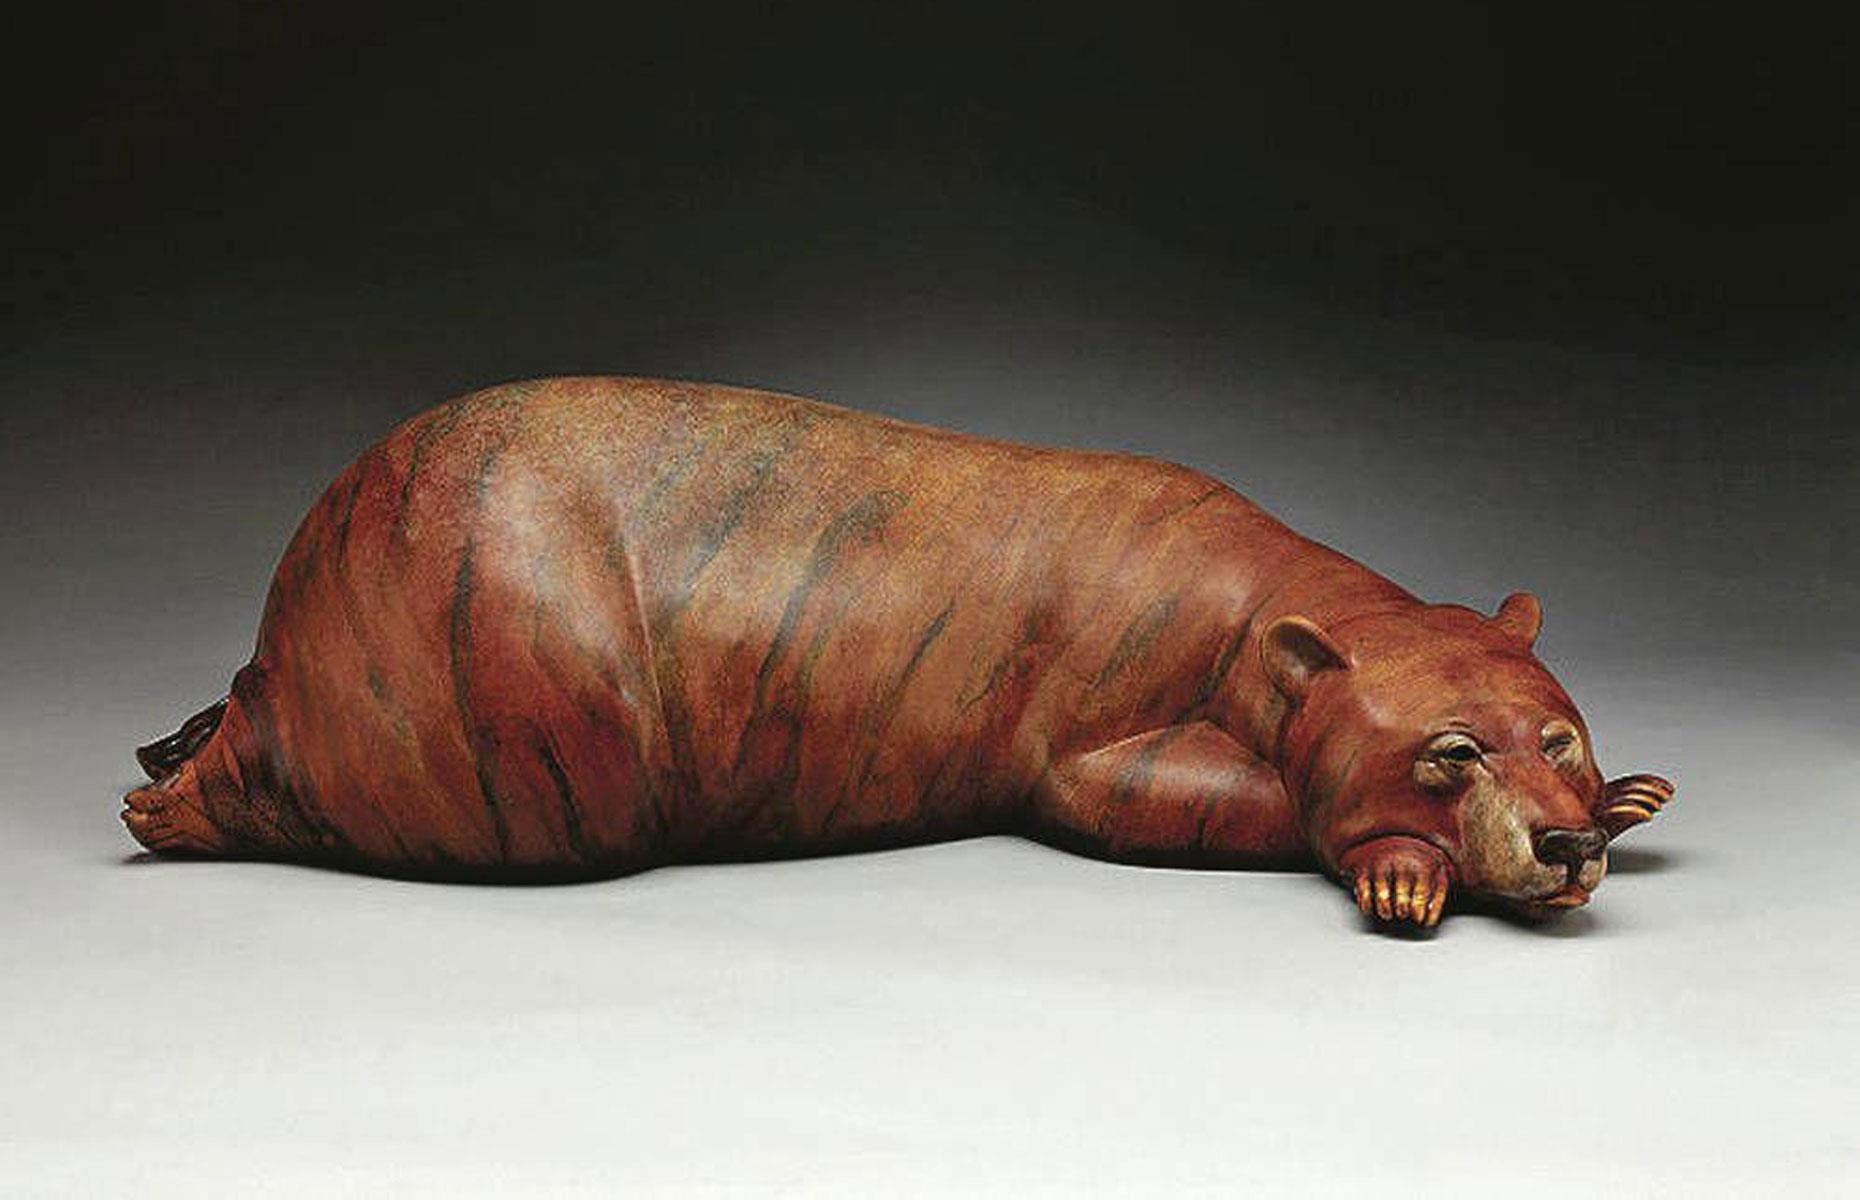 The bronze bear artwork worth $19,000 (£14.6k)